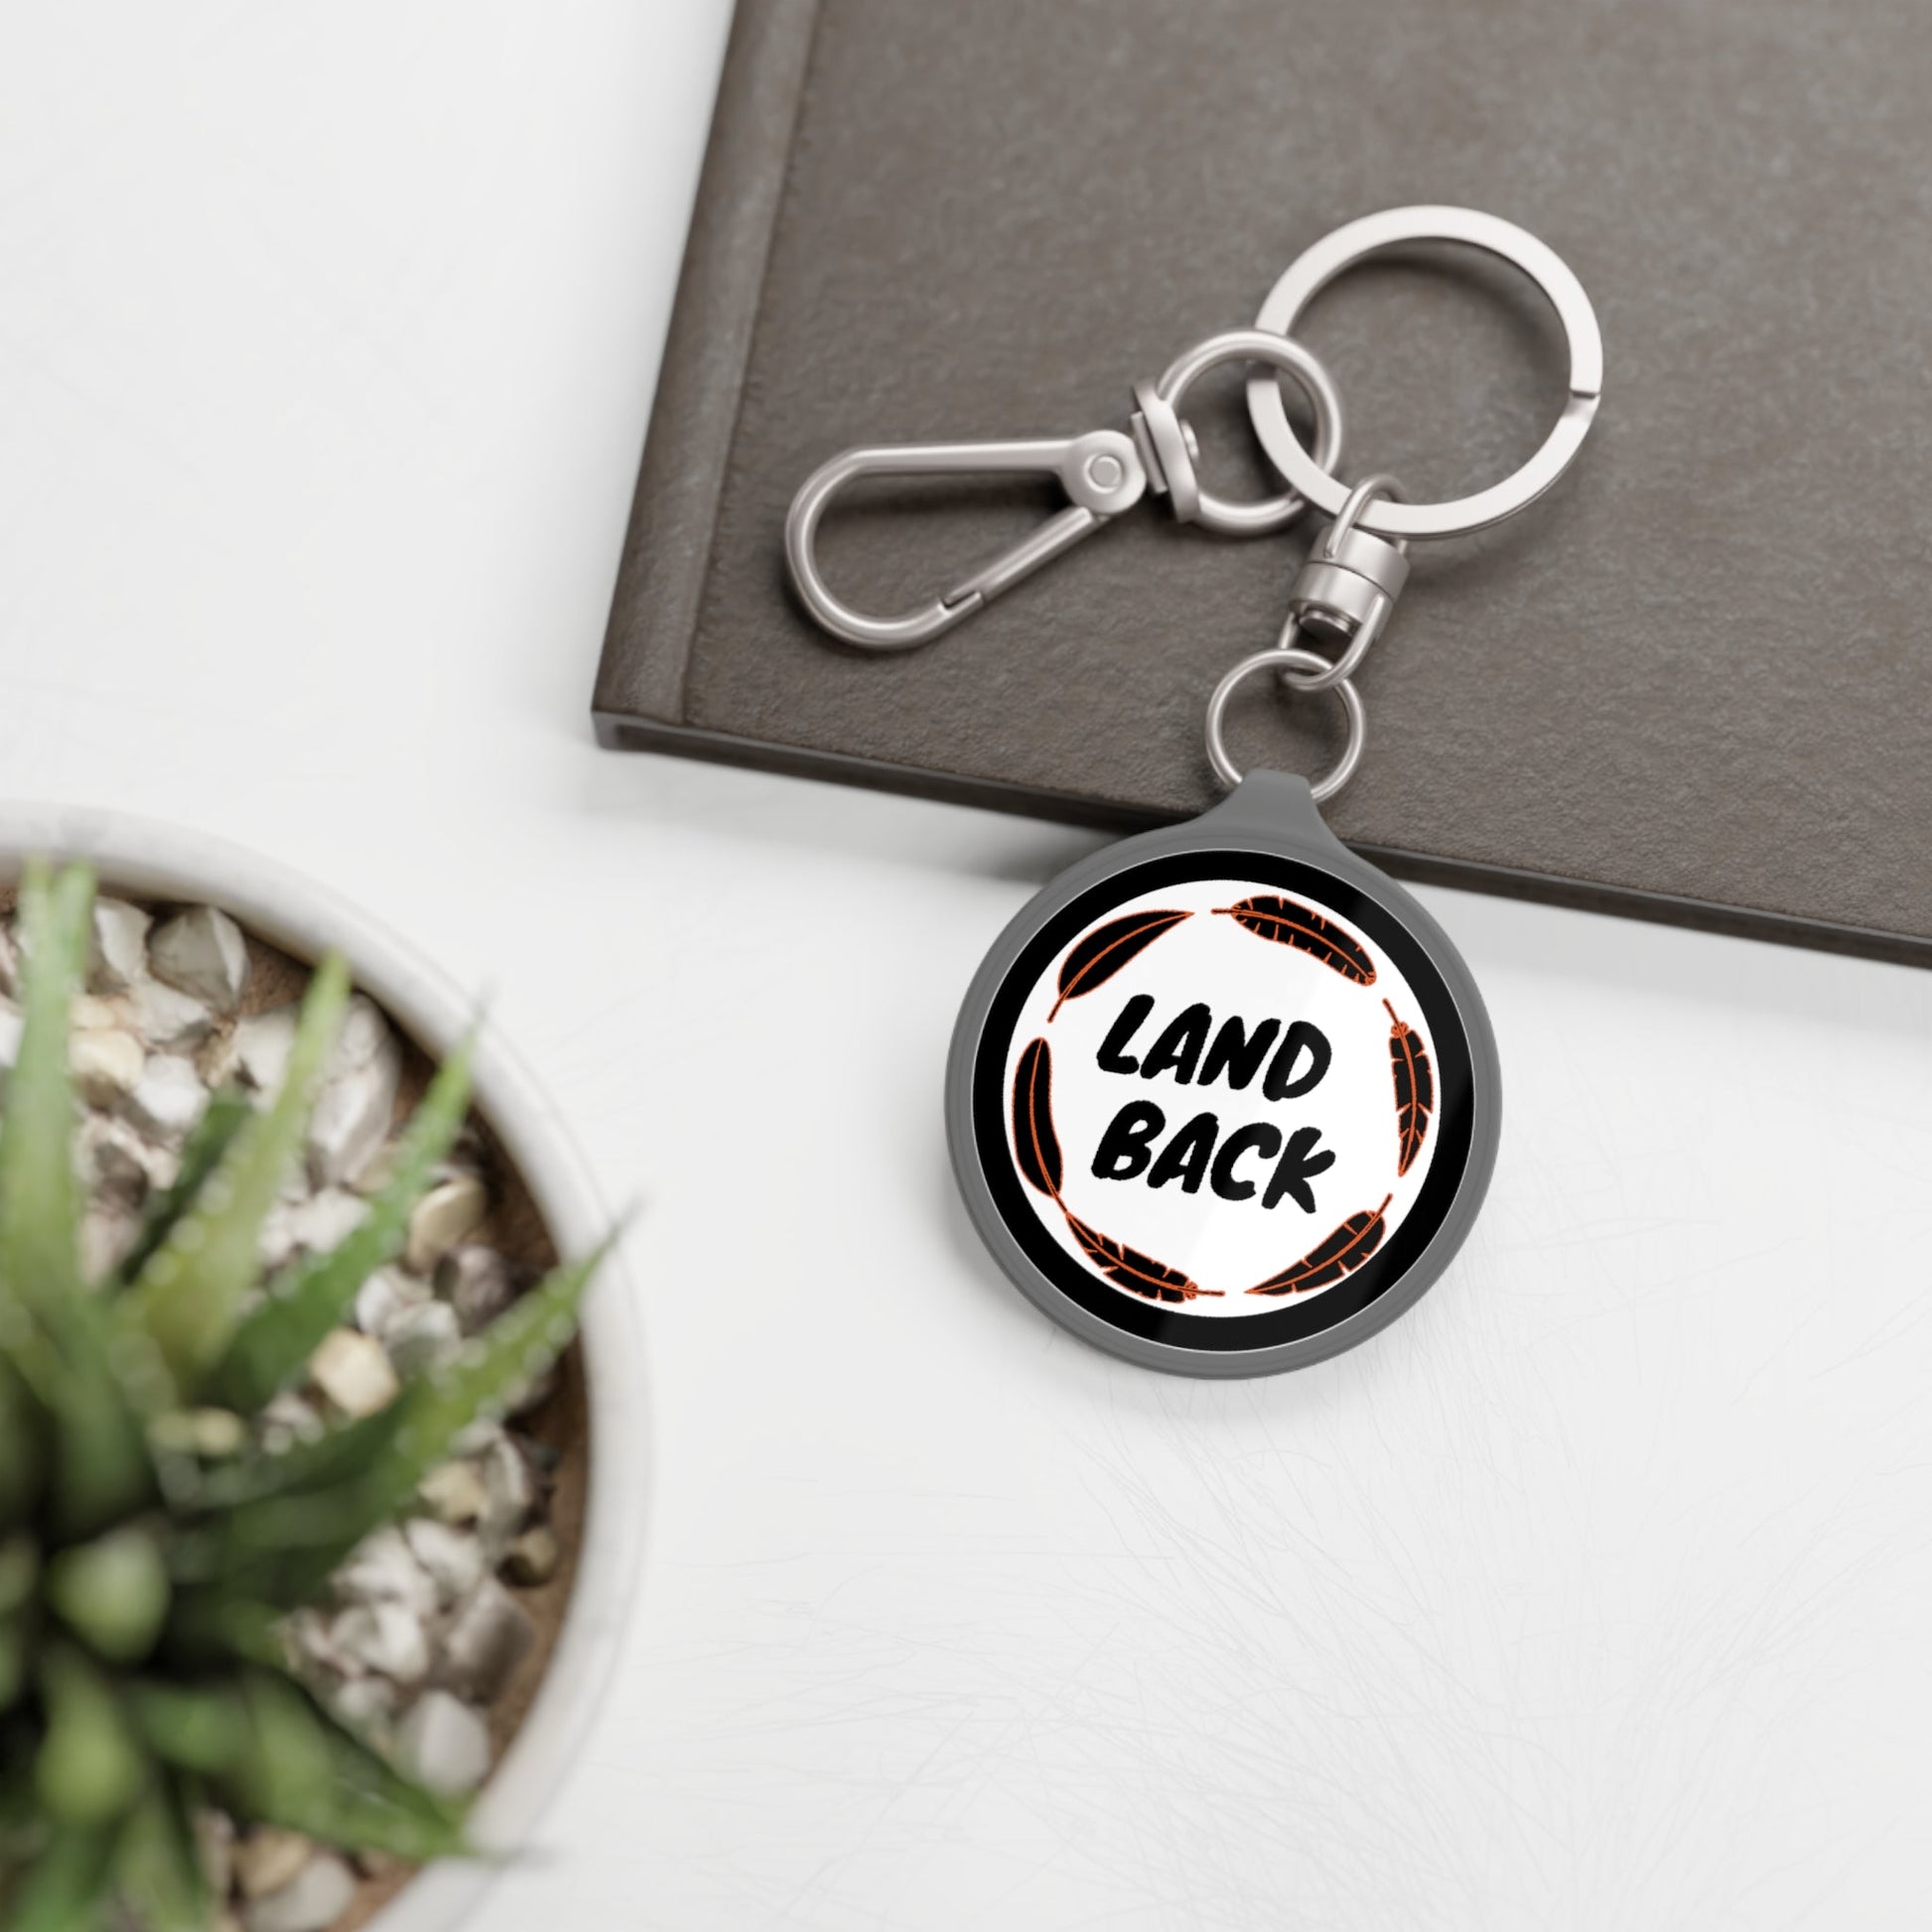 Land back Keyring Tag - Nikikw Designs